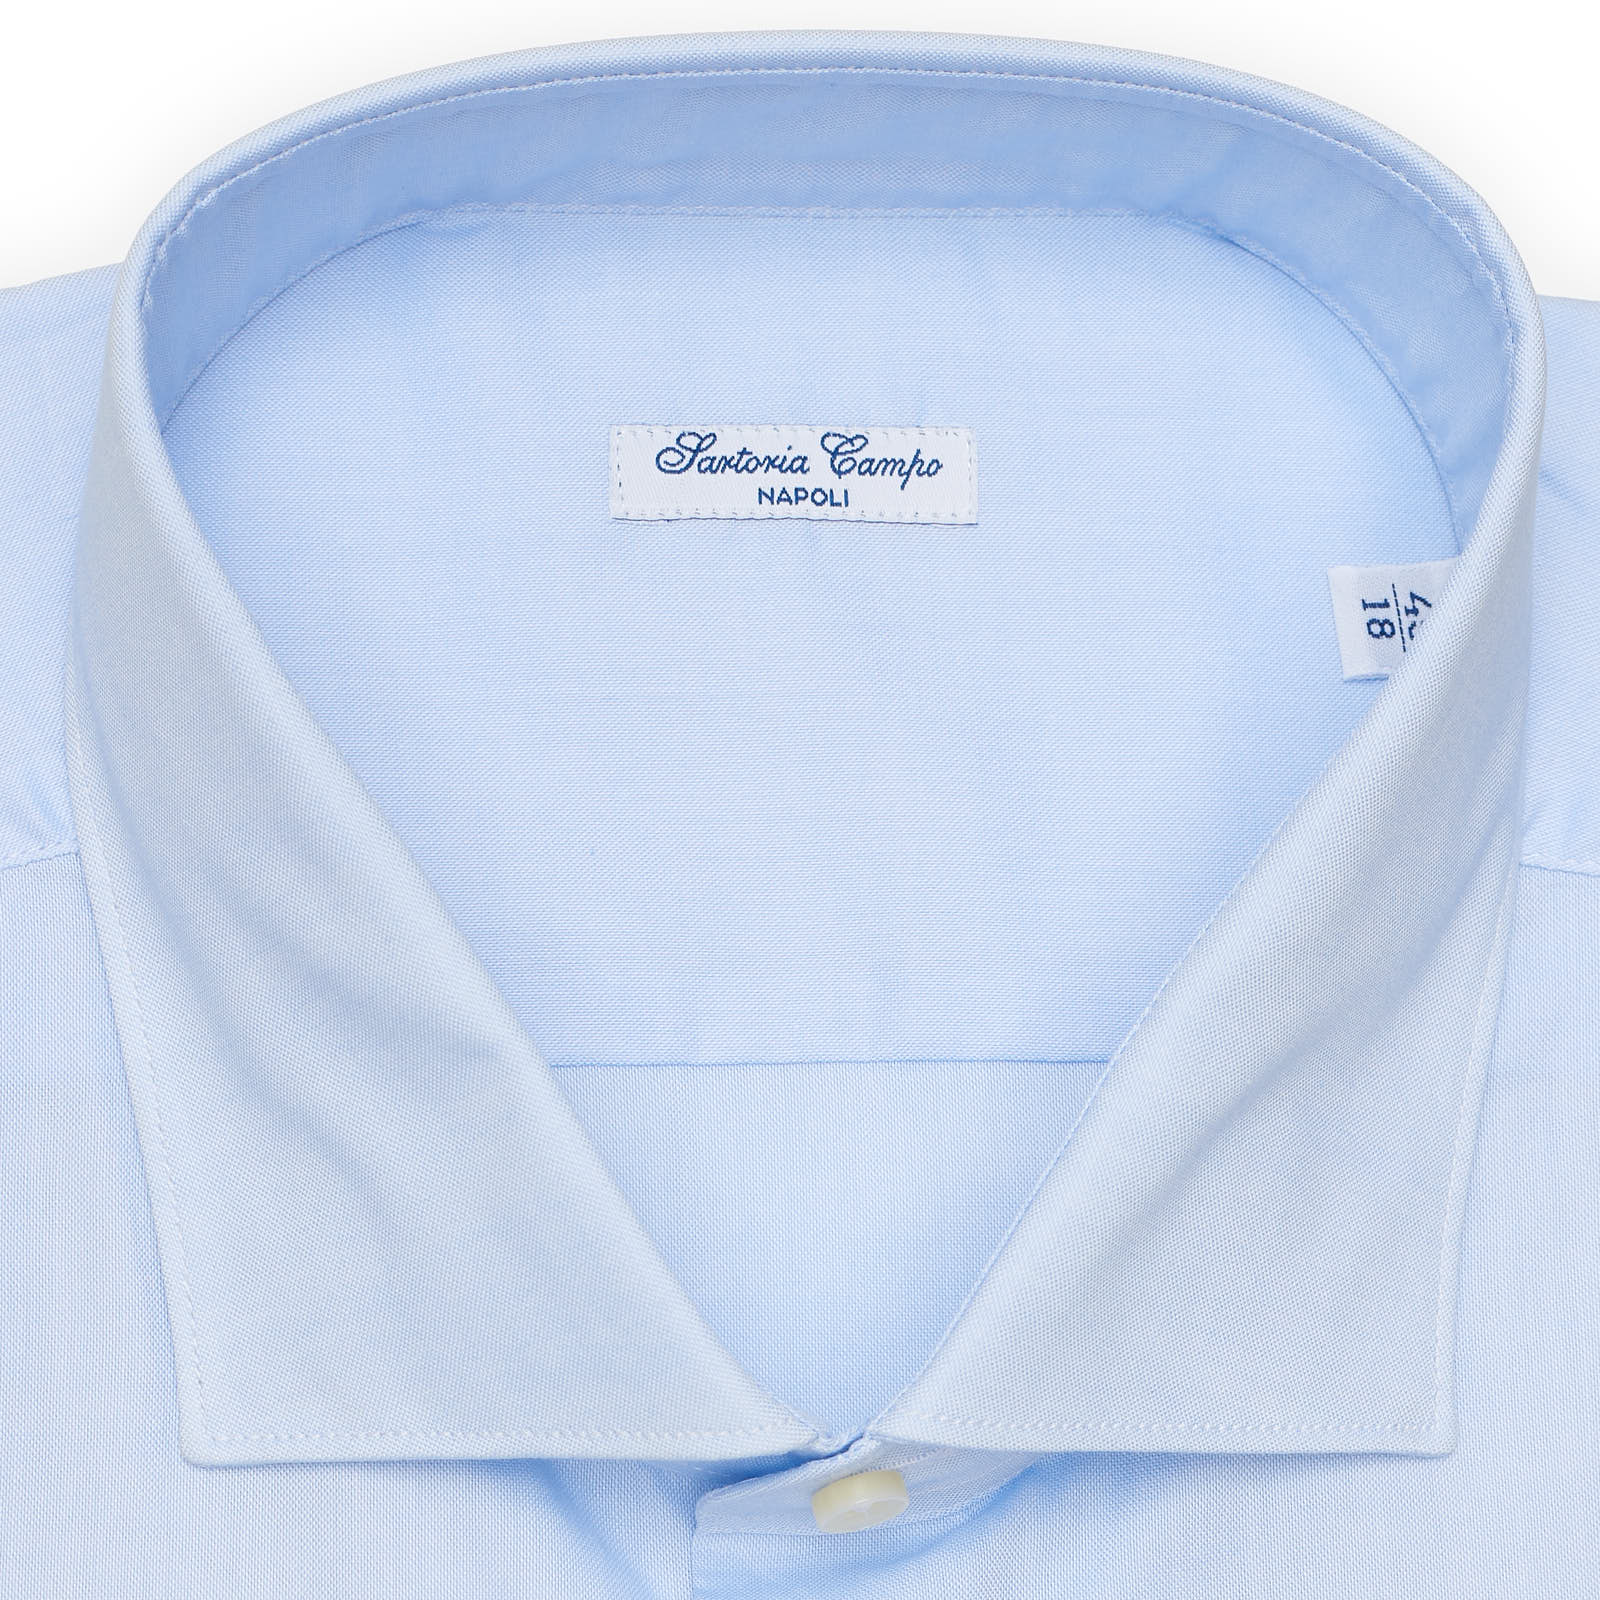 SARTORIA CAMPO NAPOLI Blue Broadcloth Cotton Dress Shirt NEW